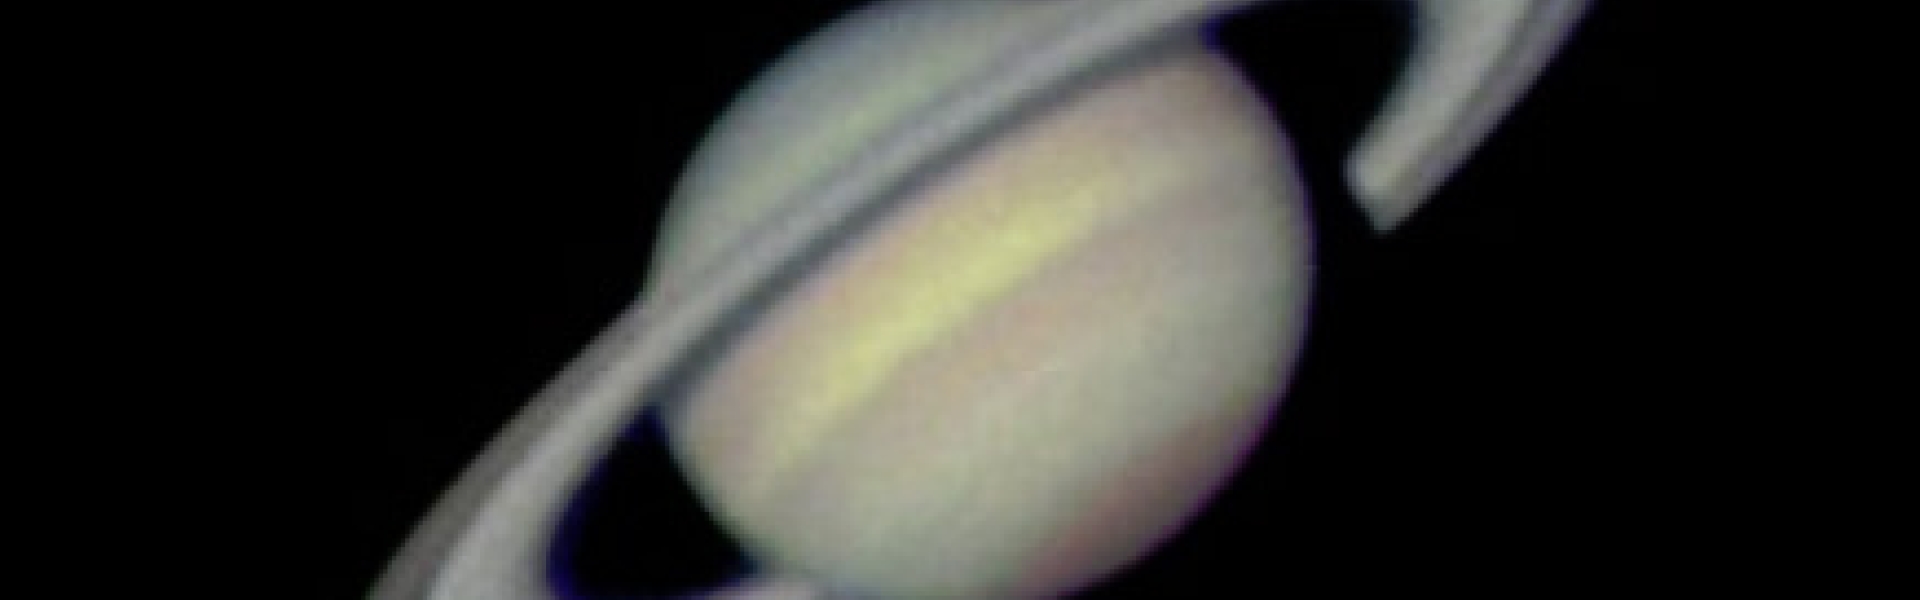 Saturn, by Jim Chung - RASC Member